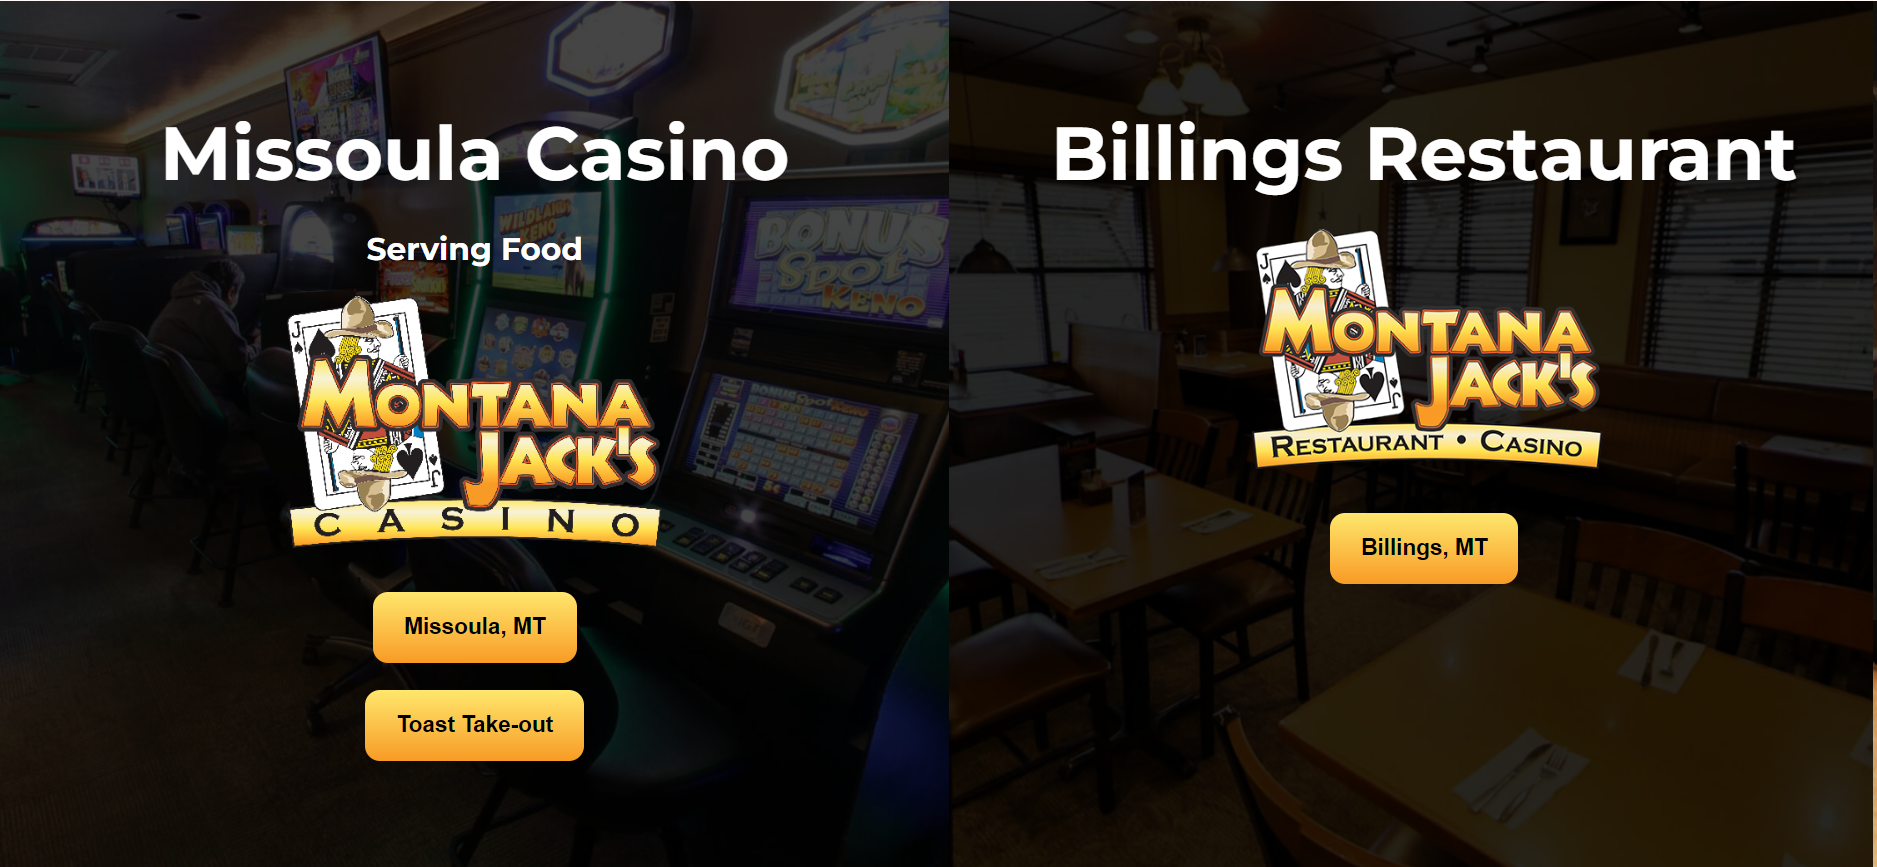 Montana Jack's Restaurant & Casino